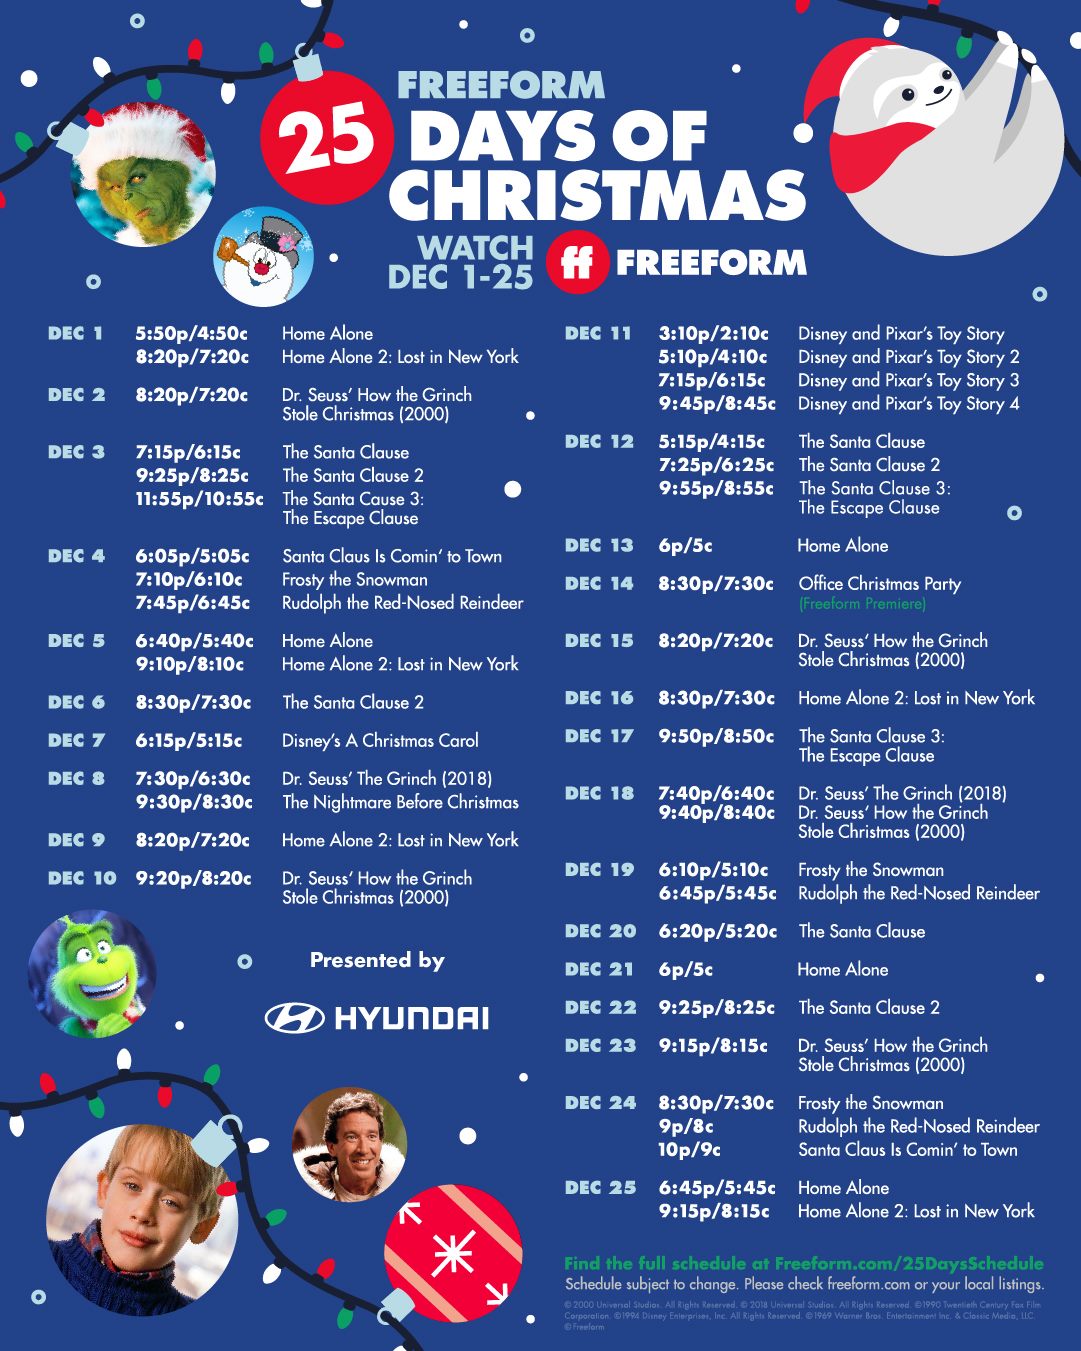 Freeform's 25 Days of Christmas